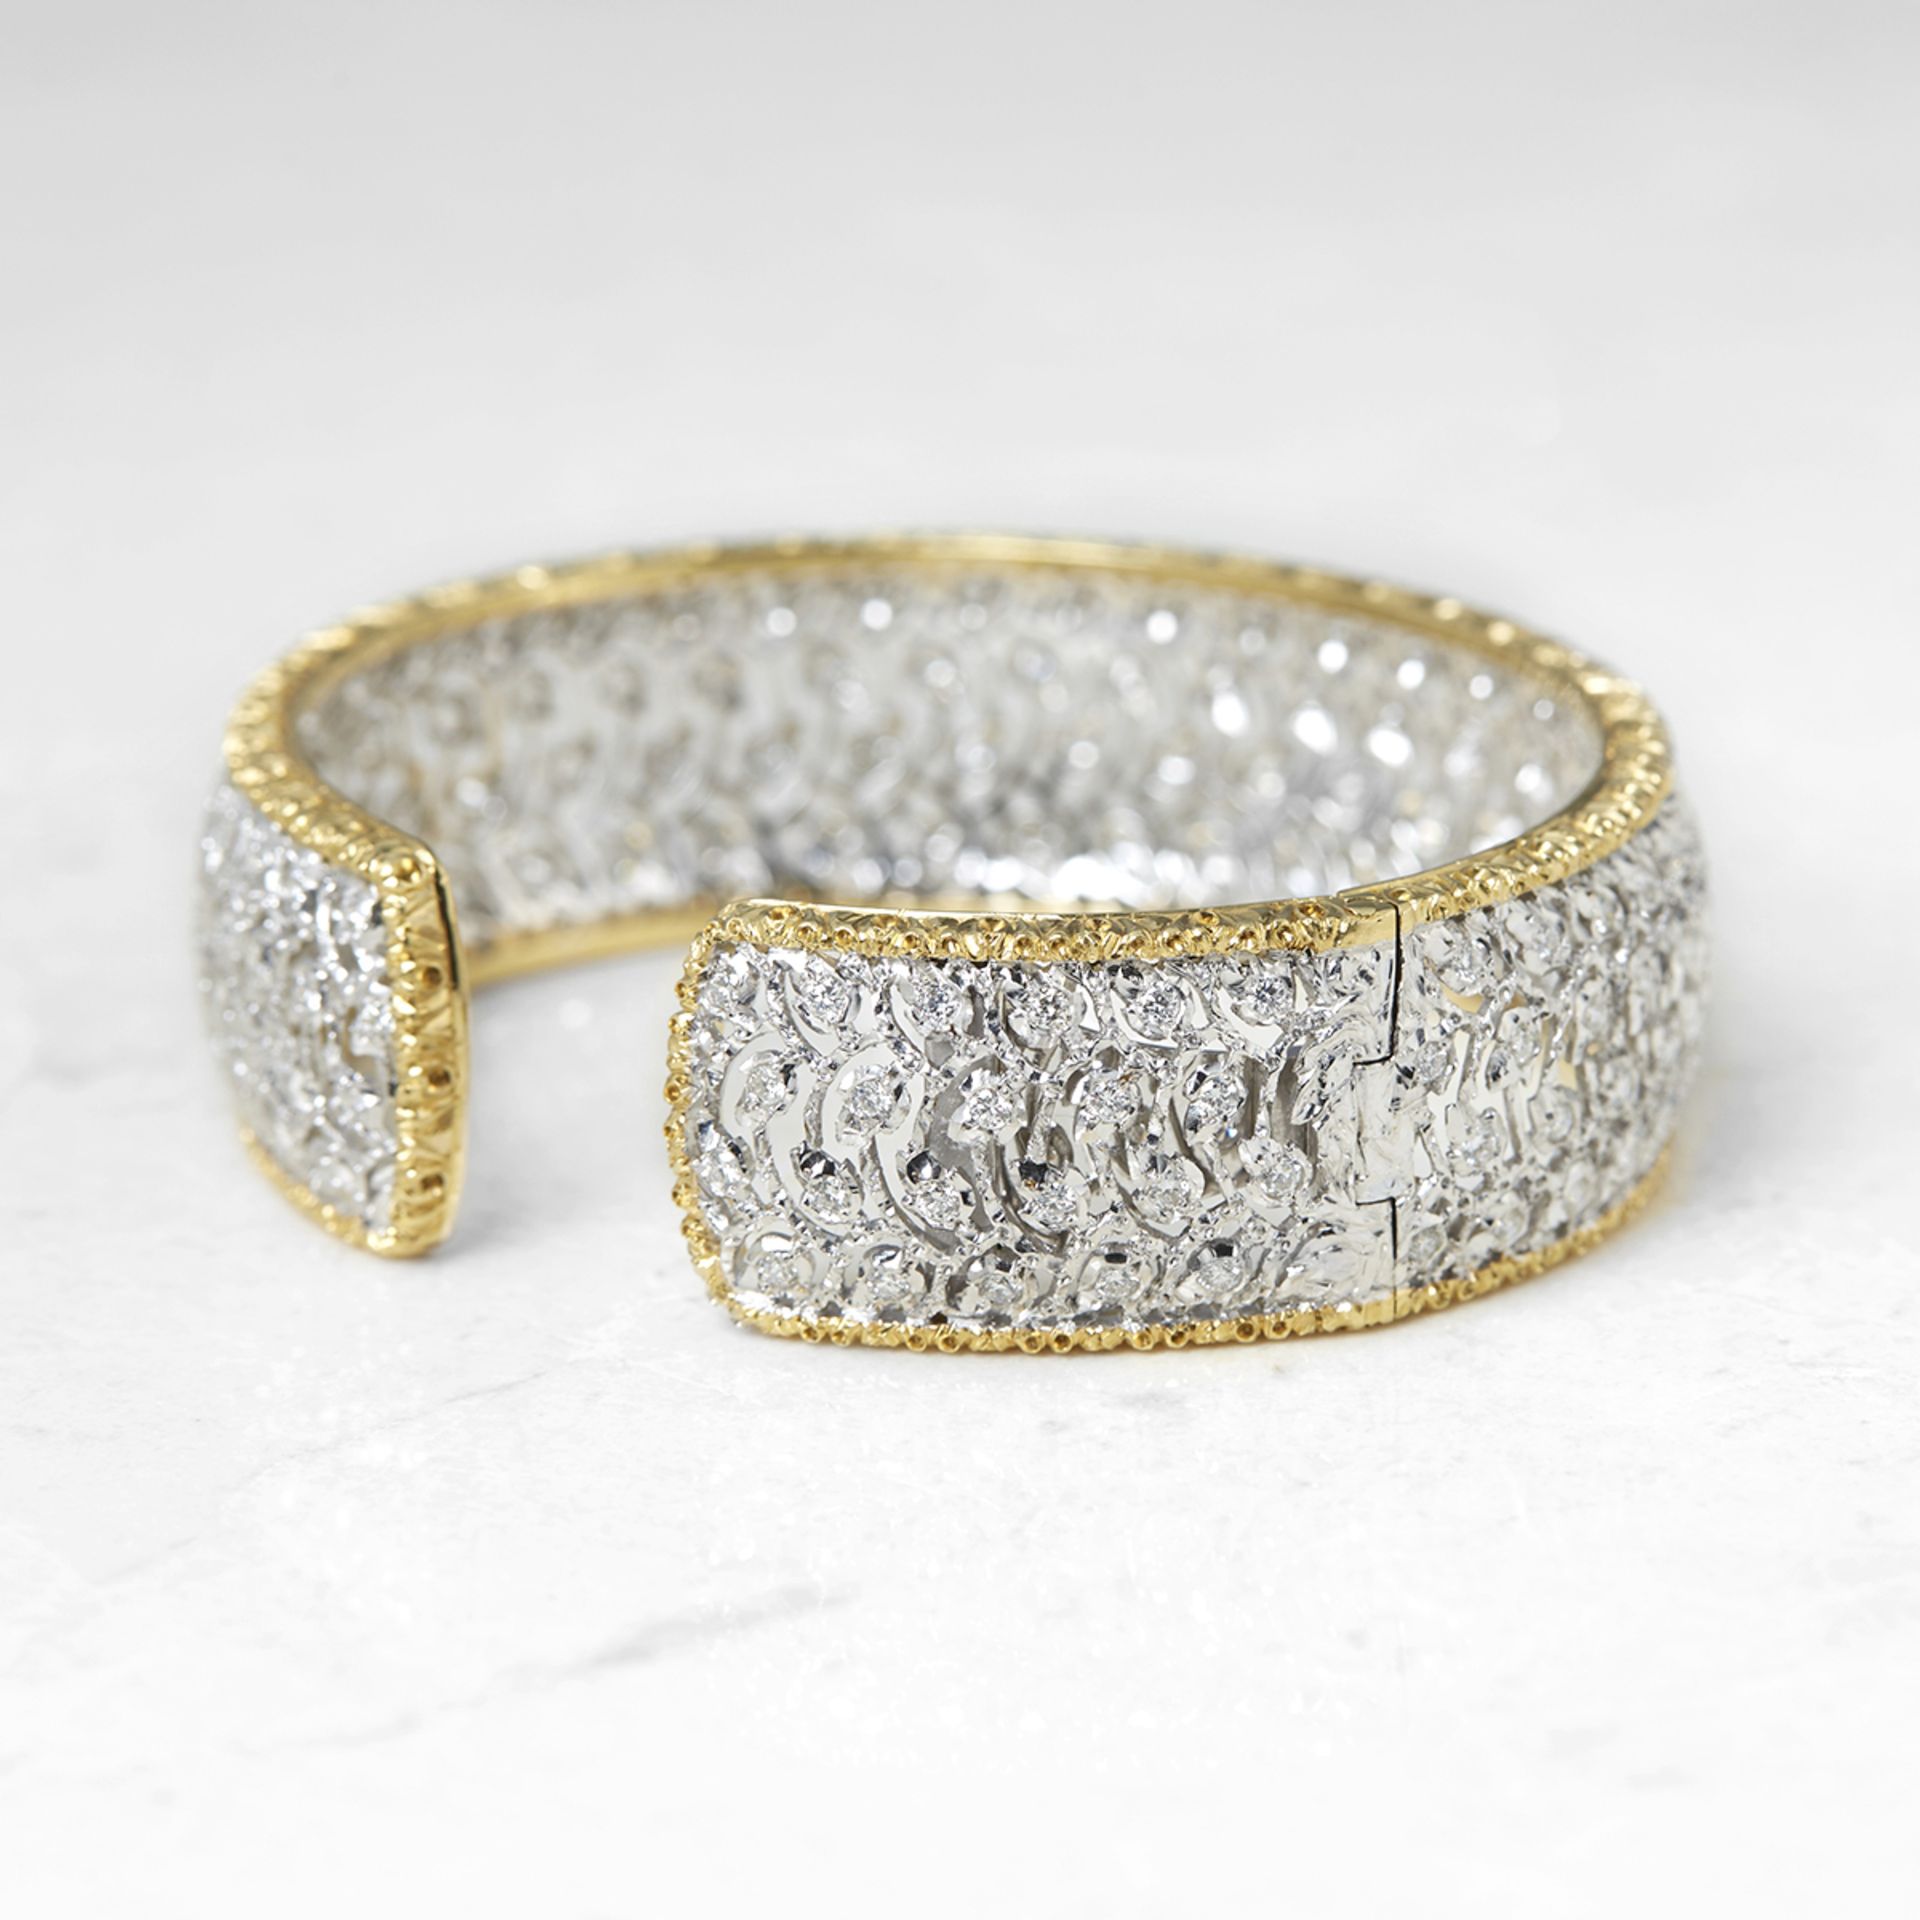 Buccellati 18k White & Yellow Gold 5.00ct Diamond Cuff Bracelet - Image 2 of 8